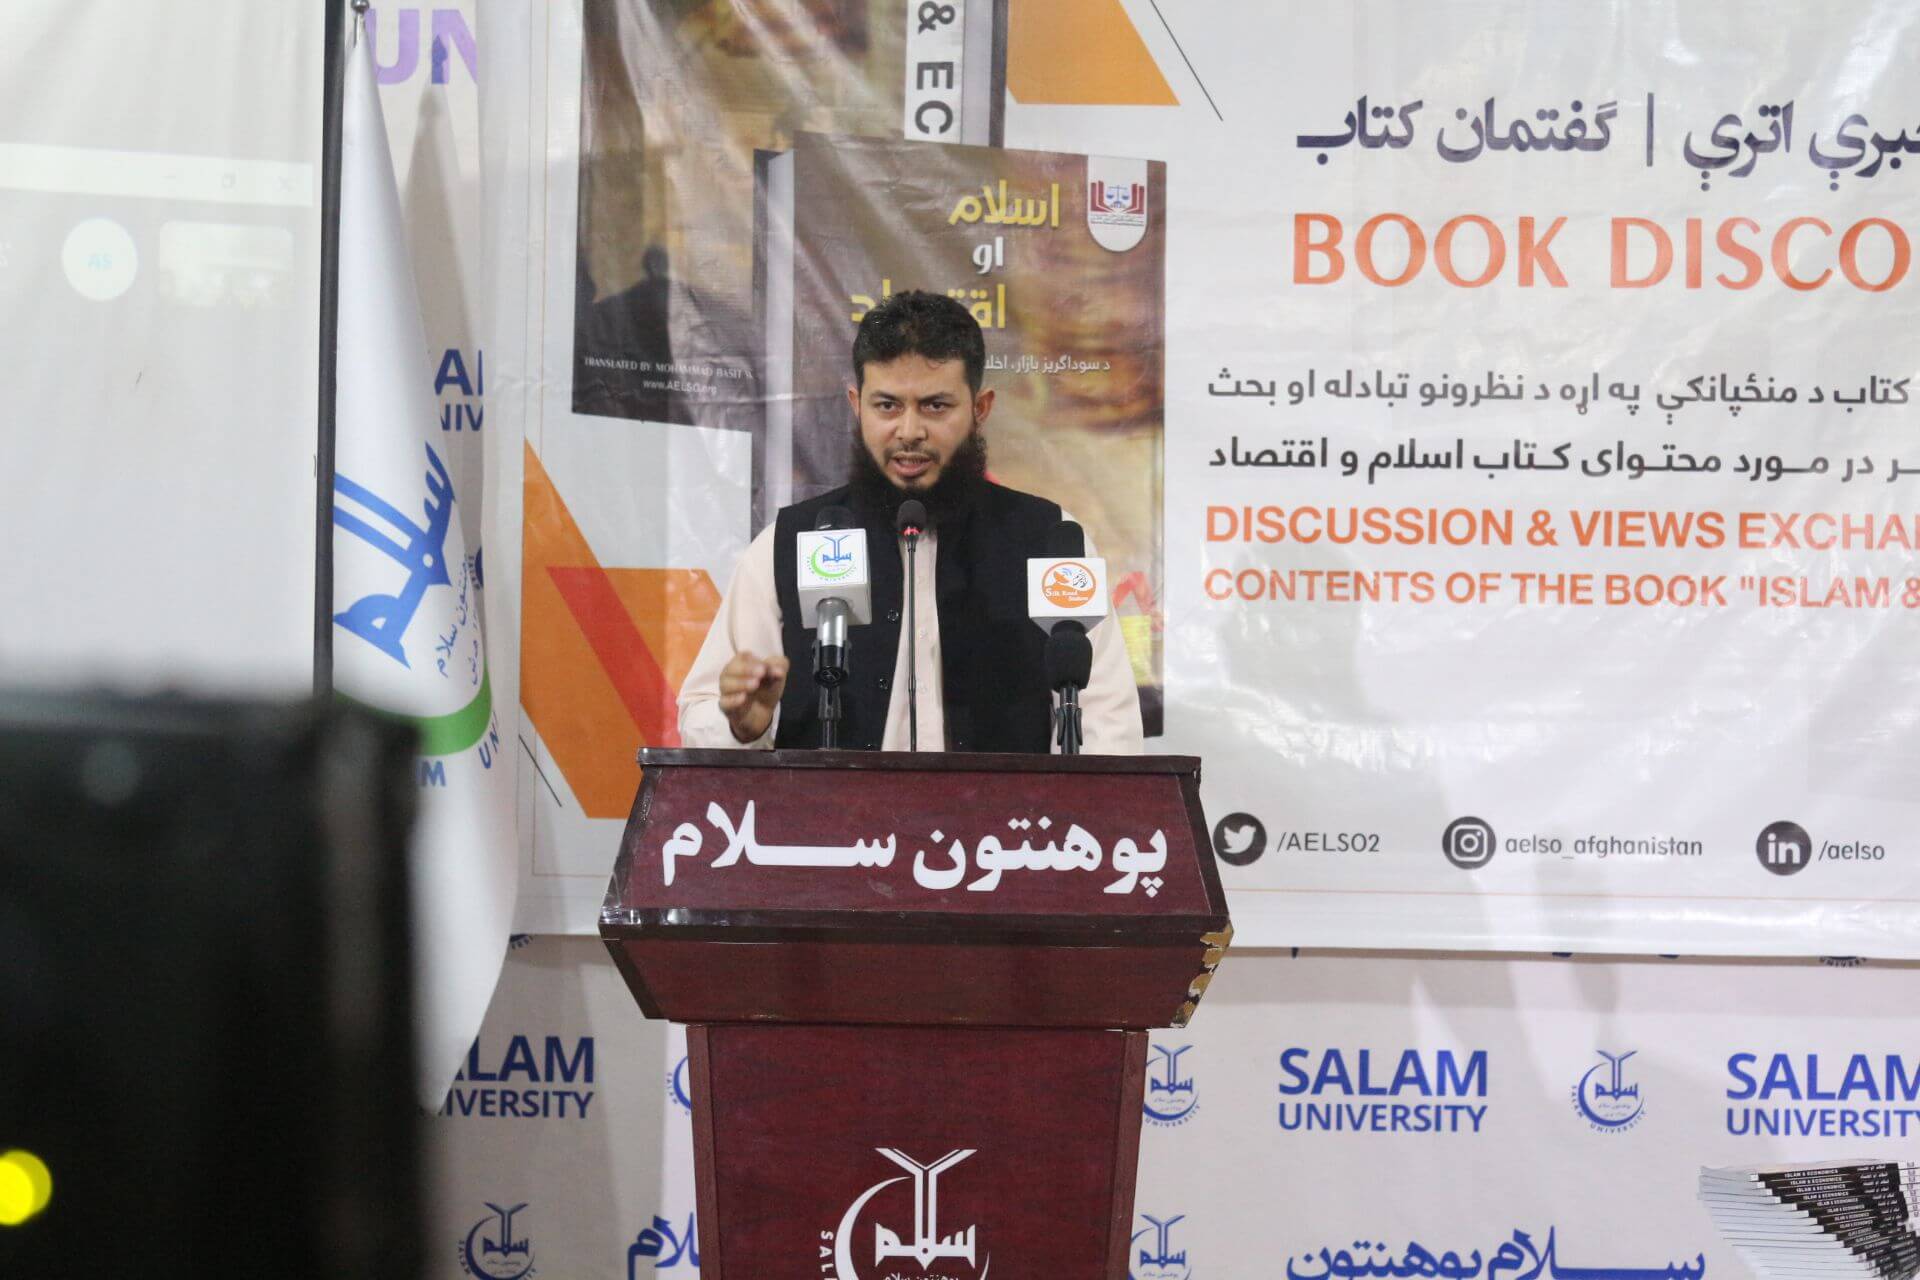 Dr. Mohammad Tamim Sediqi, Vice Chancellor of Salam University